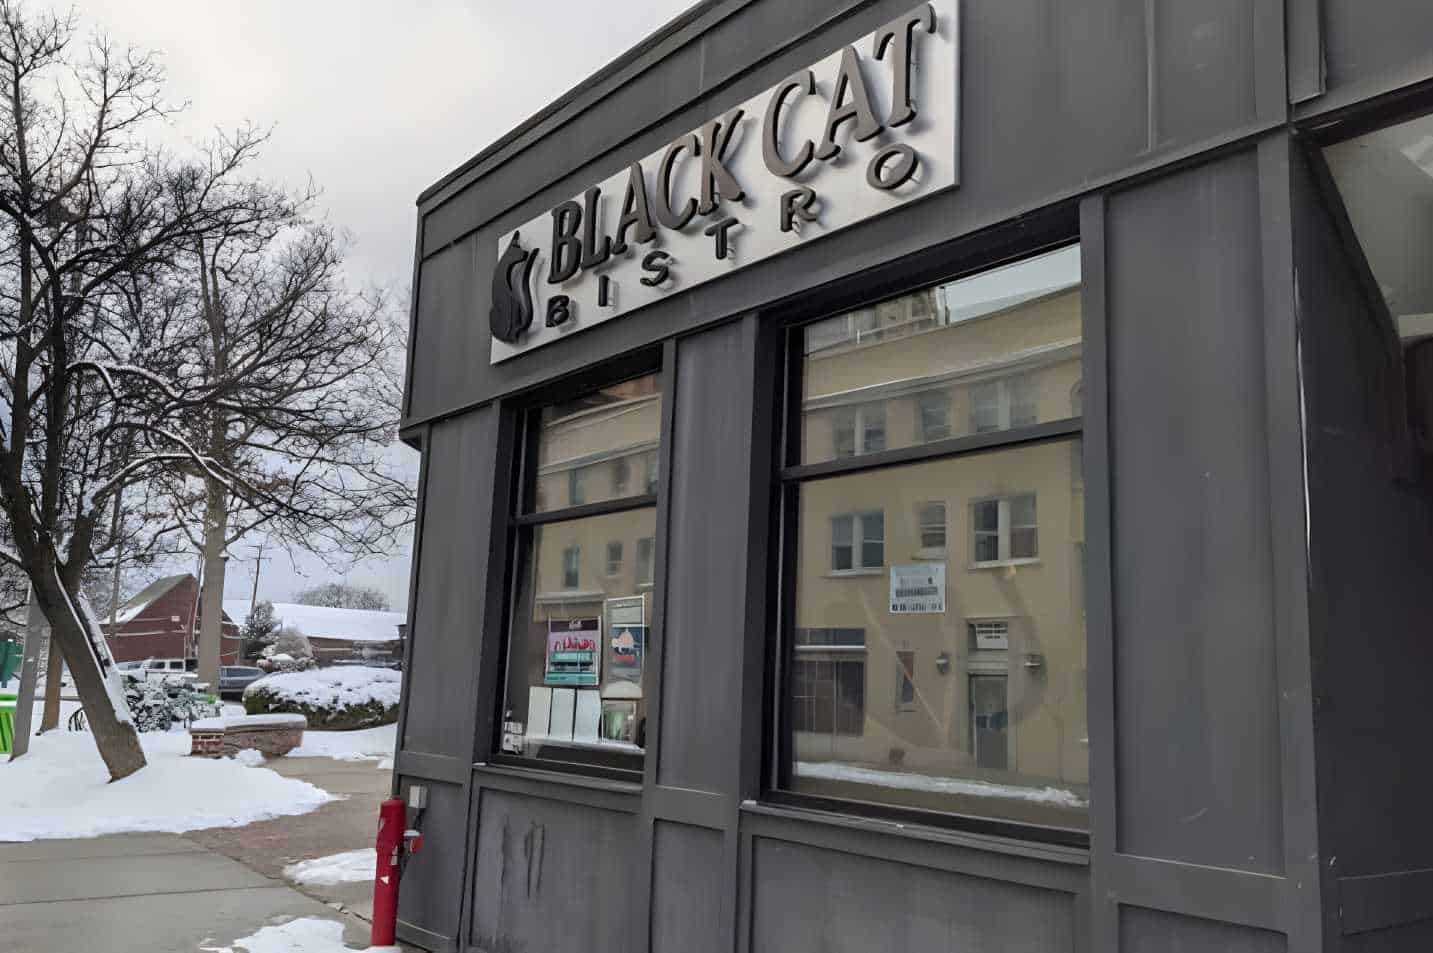 The Black Cat Bistro Best Restaurants in East Lansing, MI